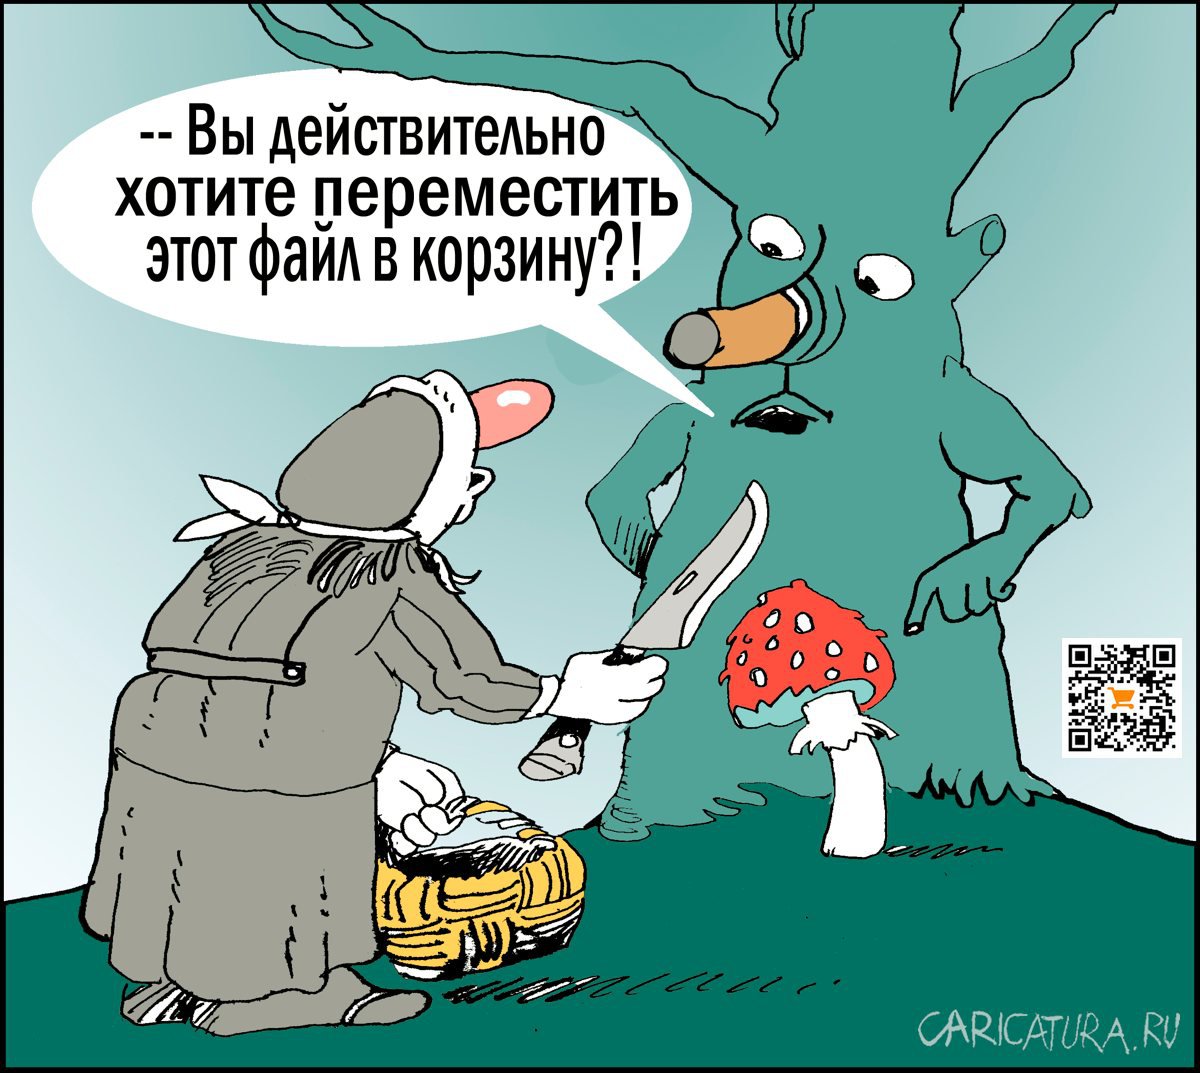 Карикатура "Файл", Александр Уваров